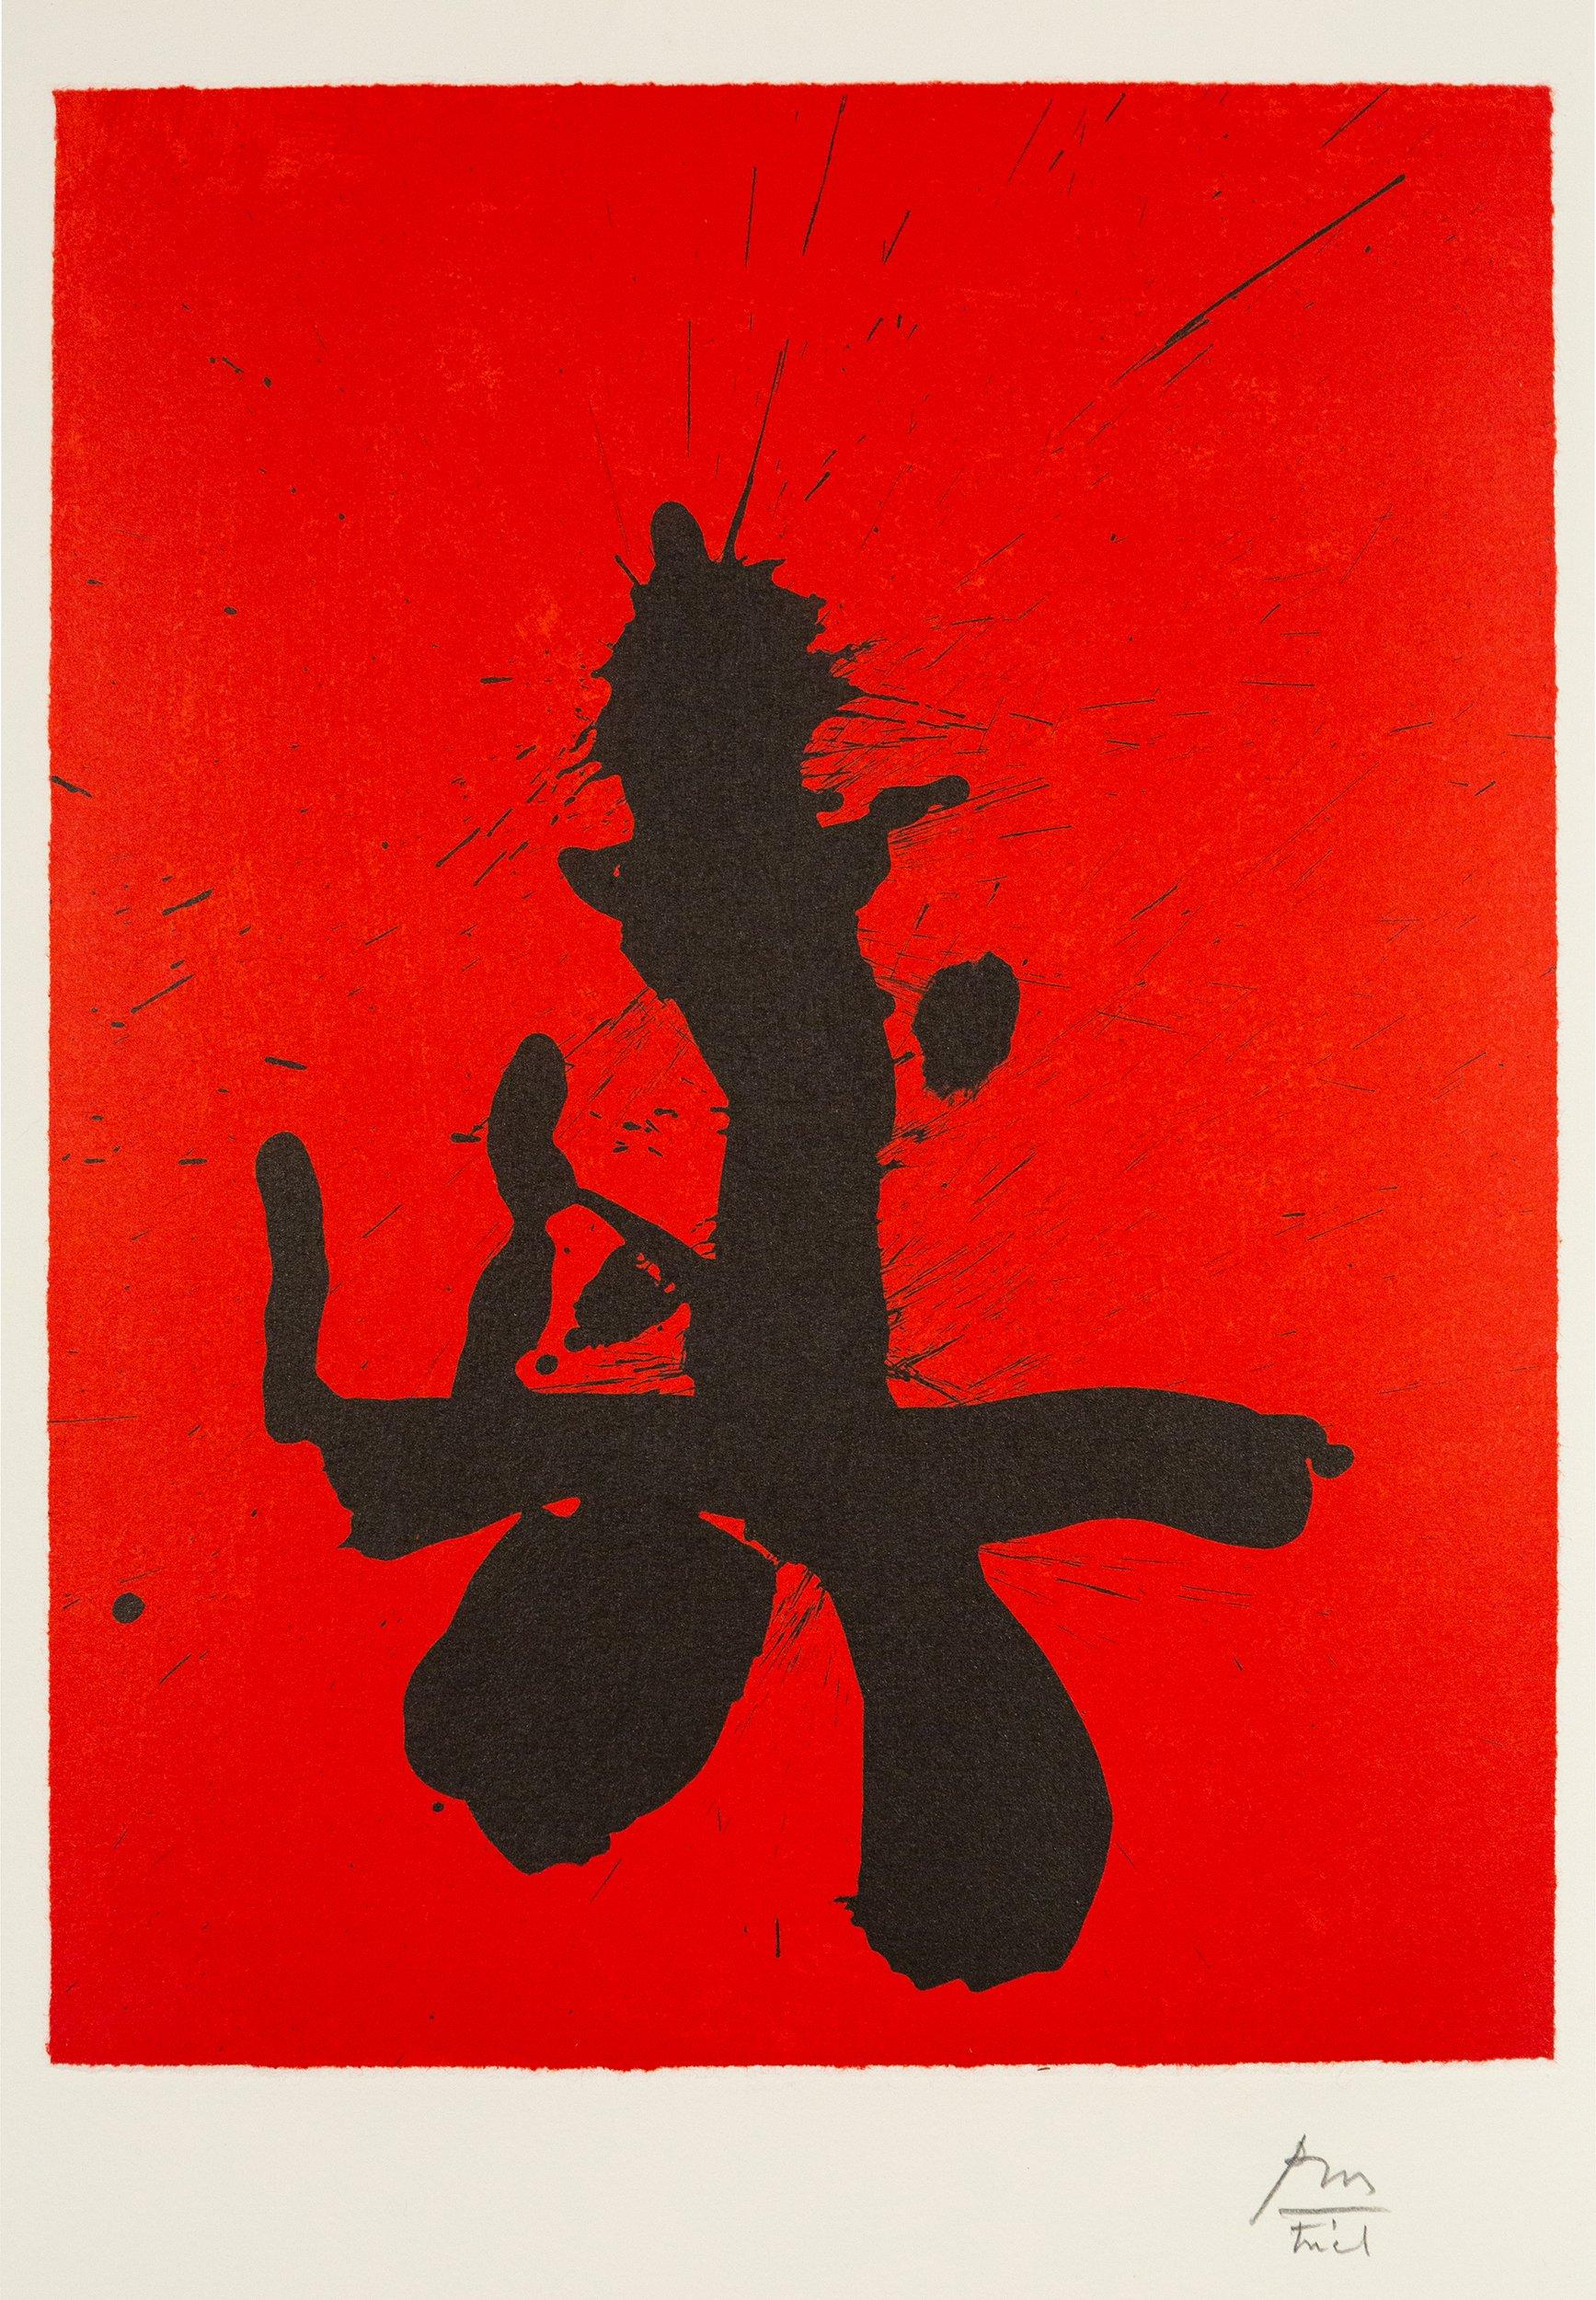 Samurai (Octavio Paz Suite), Lithograph, 1988 - Print by Robert Motherwell